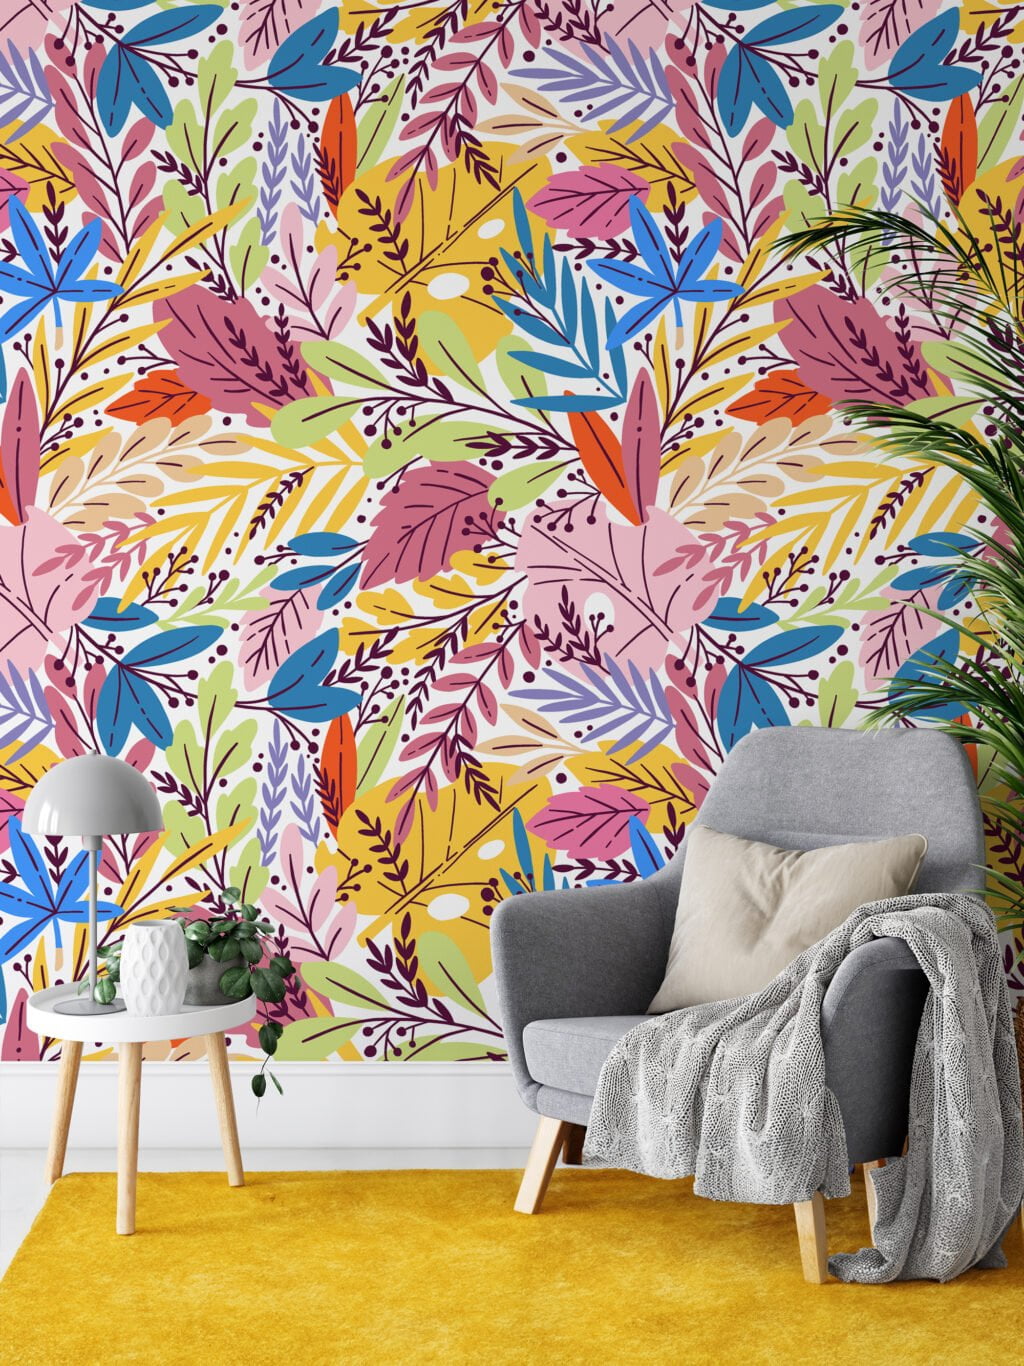 Colorful leaves Illustration Wallpaper, Vibrant Leaf Pattern Peel & Stick Wall Mural